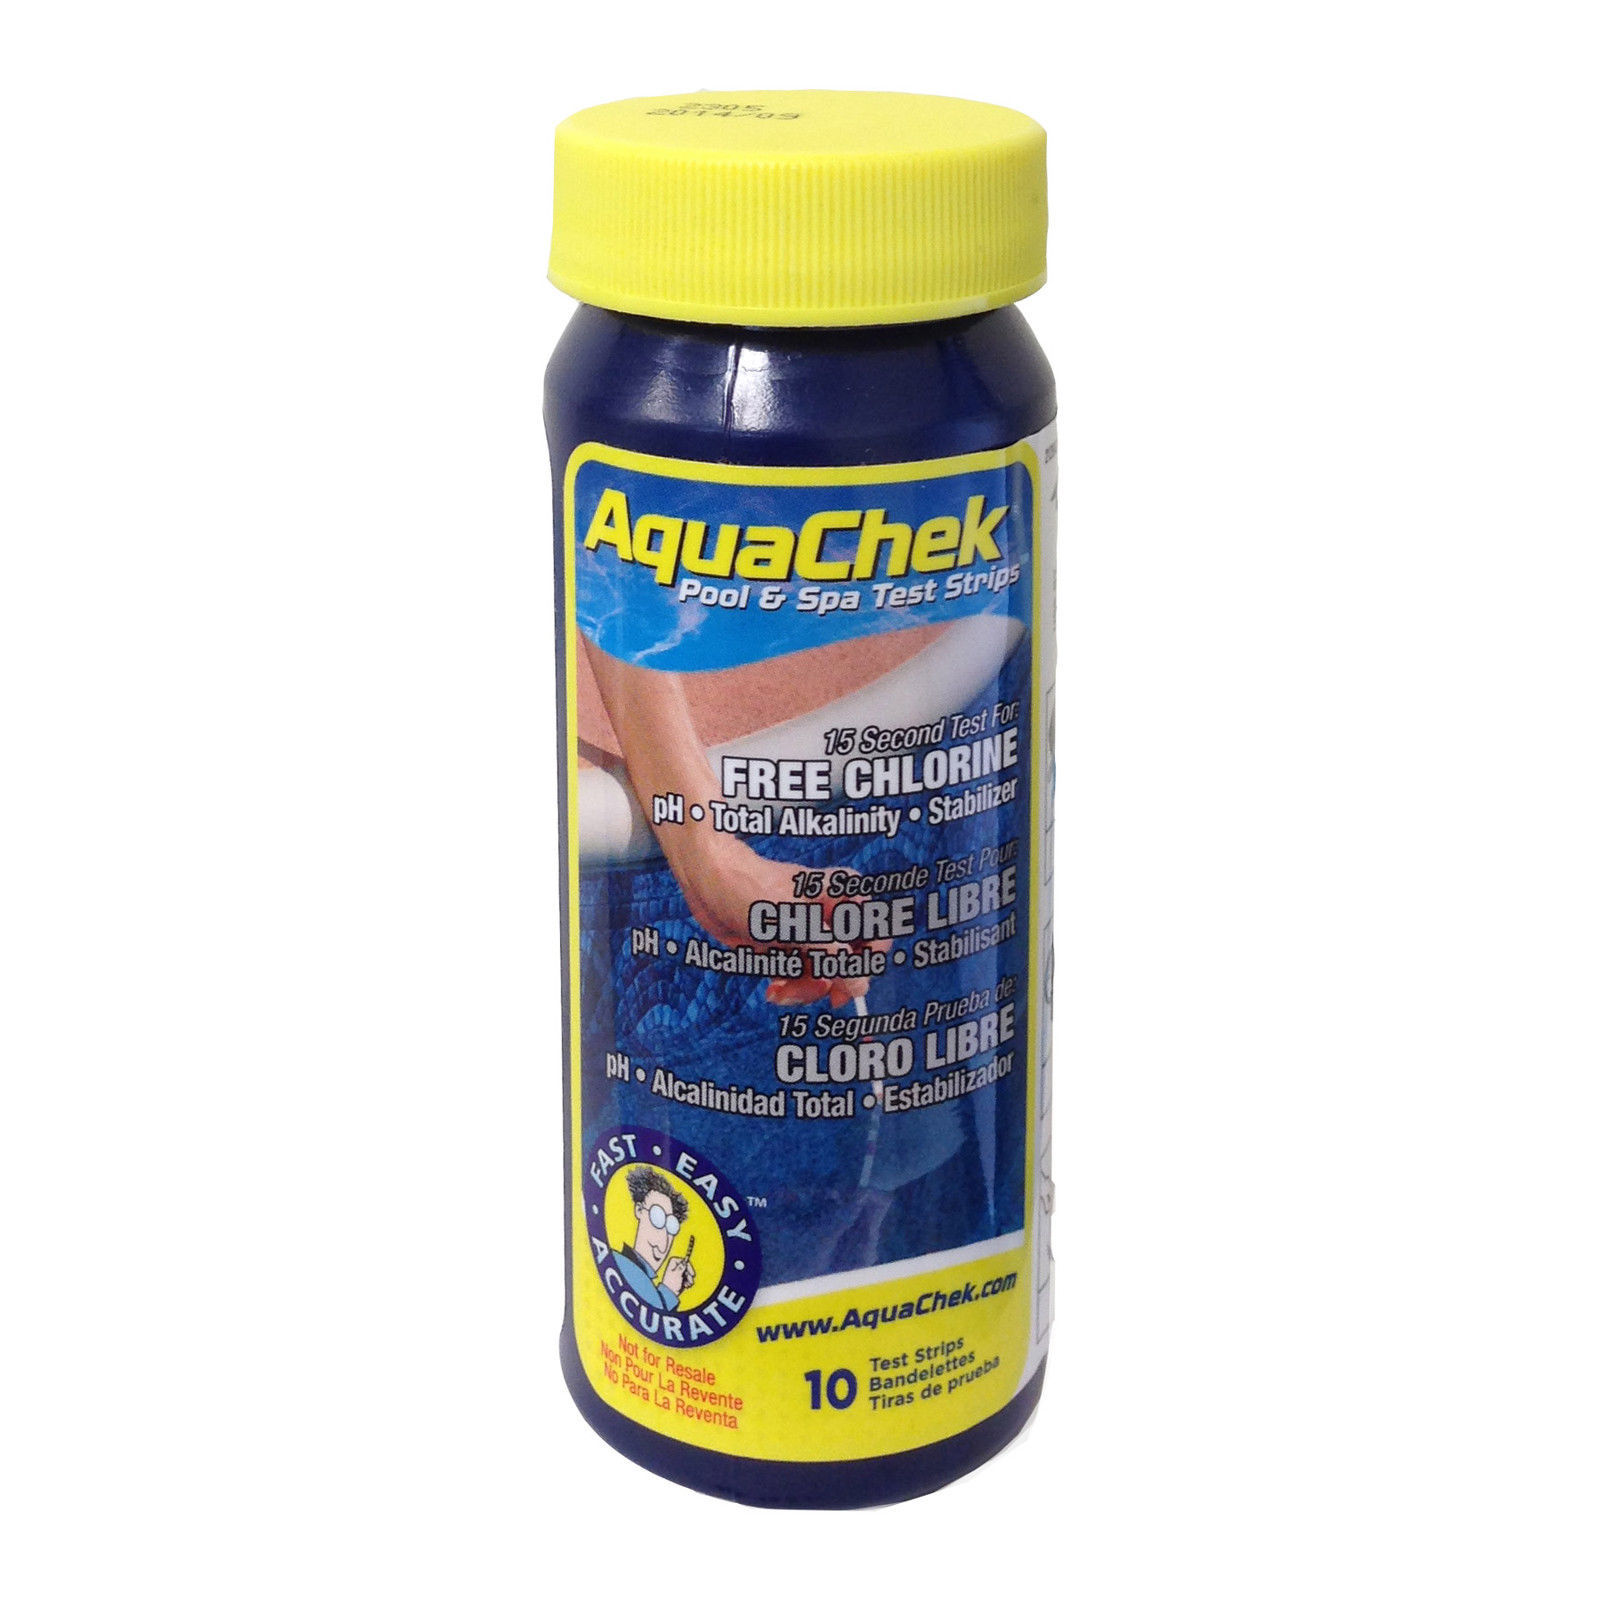 Aqua check 5 Way Test Stripes for swimming pool chlorine pH Free Chlorine Total Alkalinity Cyanuric Acid Stabilizer Aquacheck